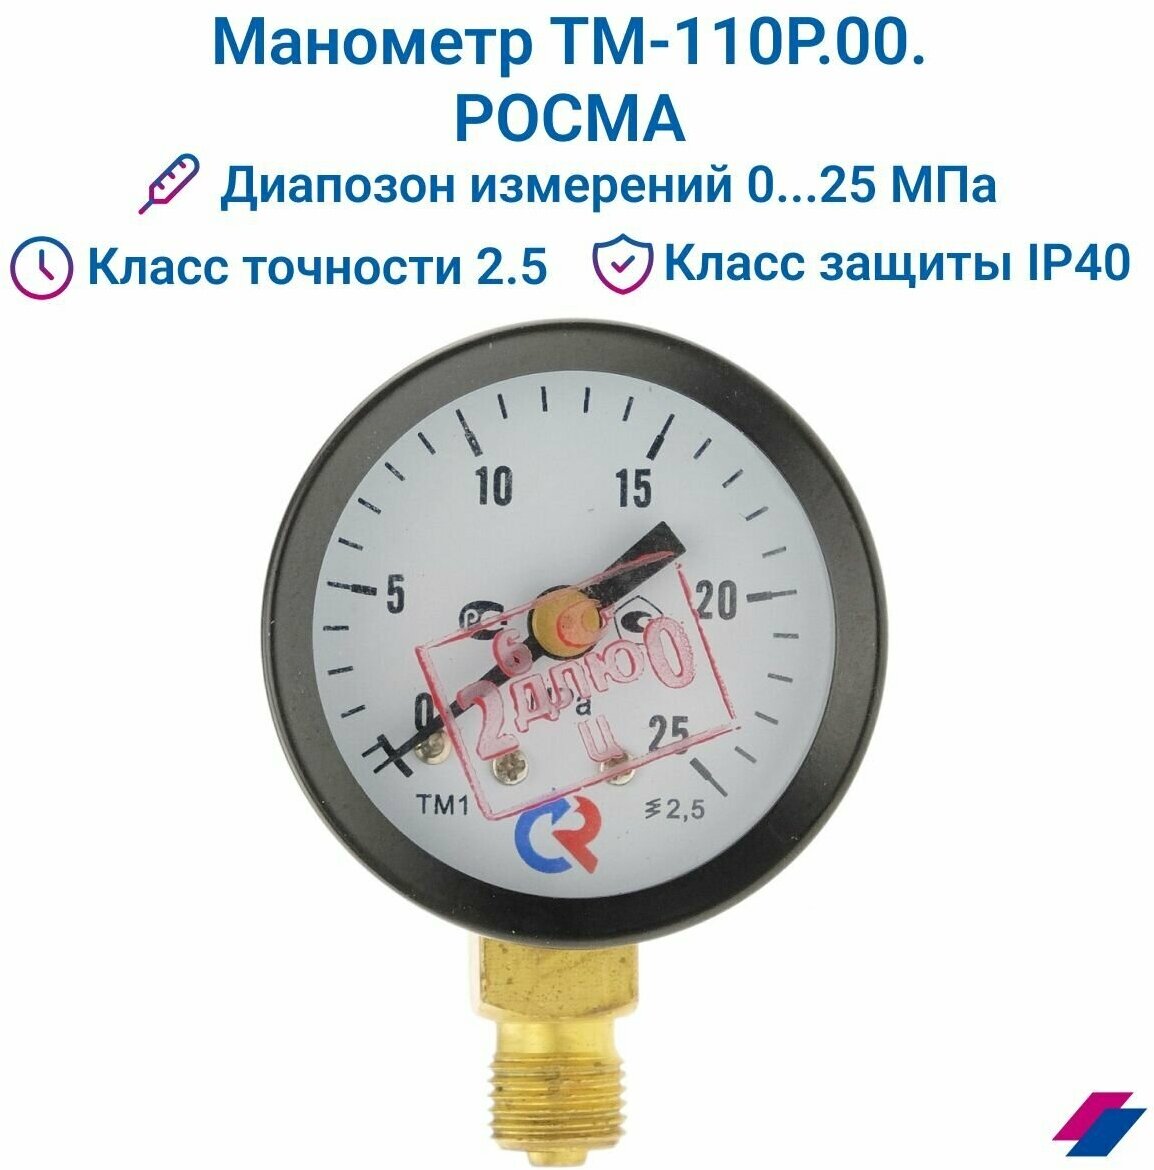 Манометр ТМ-110Р.00 (0.25 МПа) М10х1: класс точности-2,5 росма